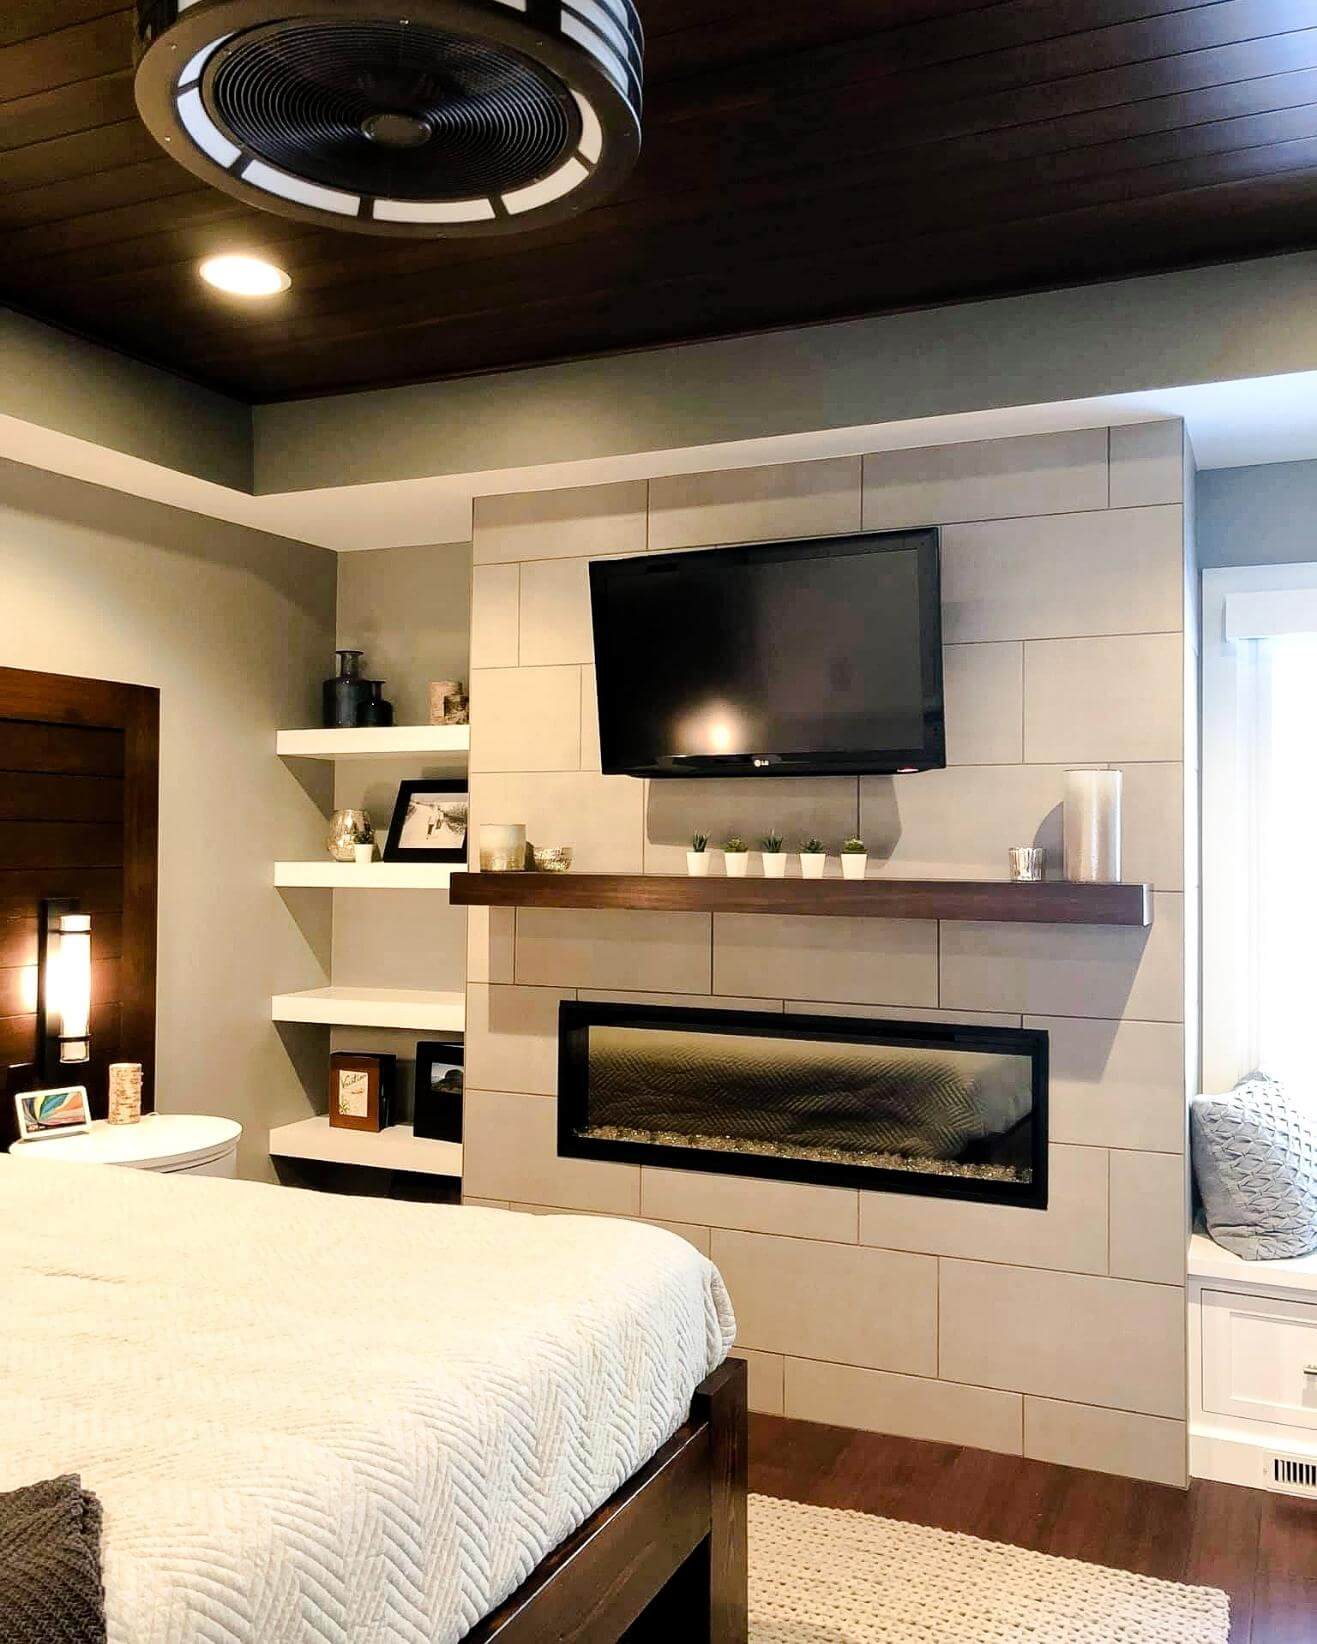 Geist residence remodel master bedroom